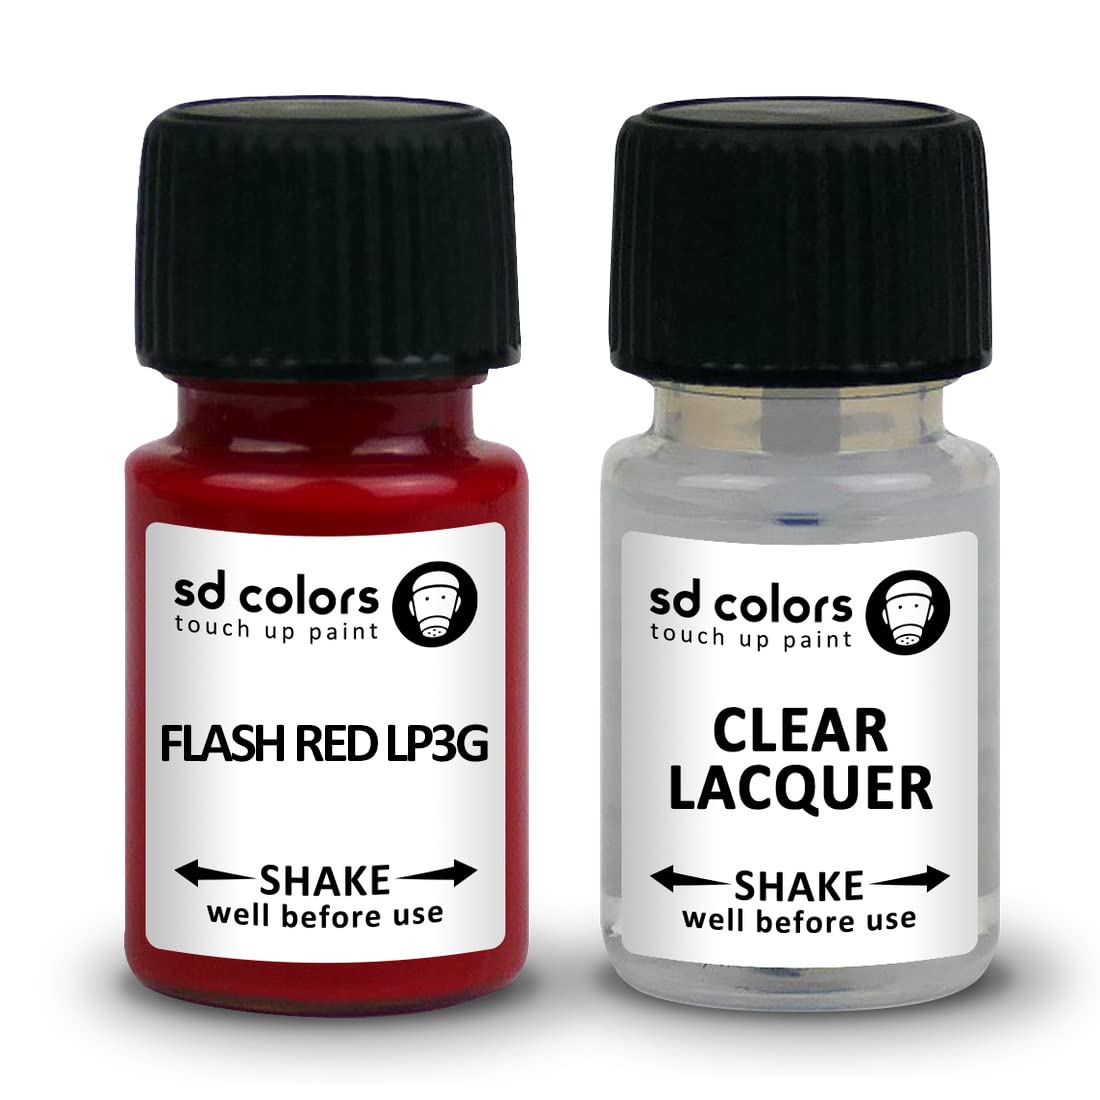 SD COLORS Ausbesserungslack für LP3G / P3G / 1240, 5 ml, Farbcode LP3G / P3G / 1240, Flash Red (Farbe + Lack) von SD COLORS